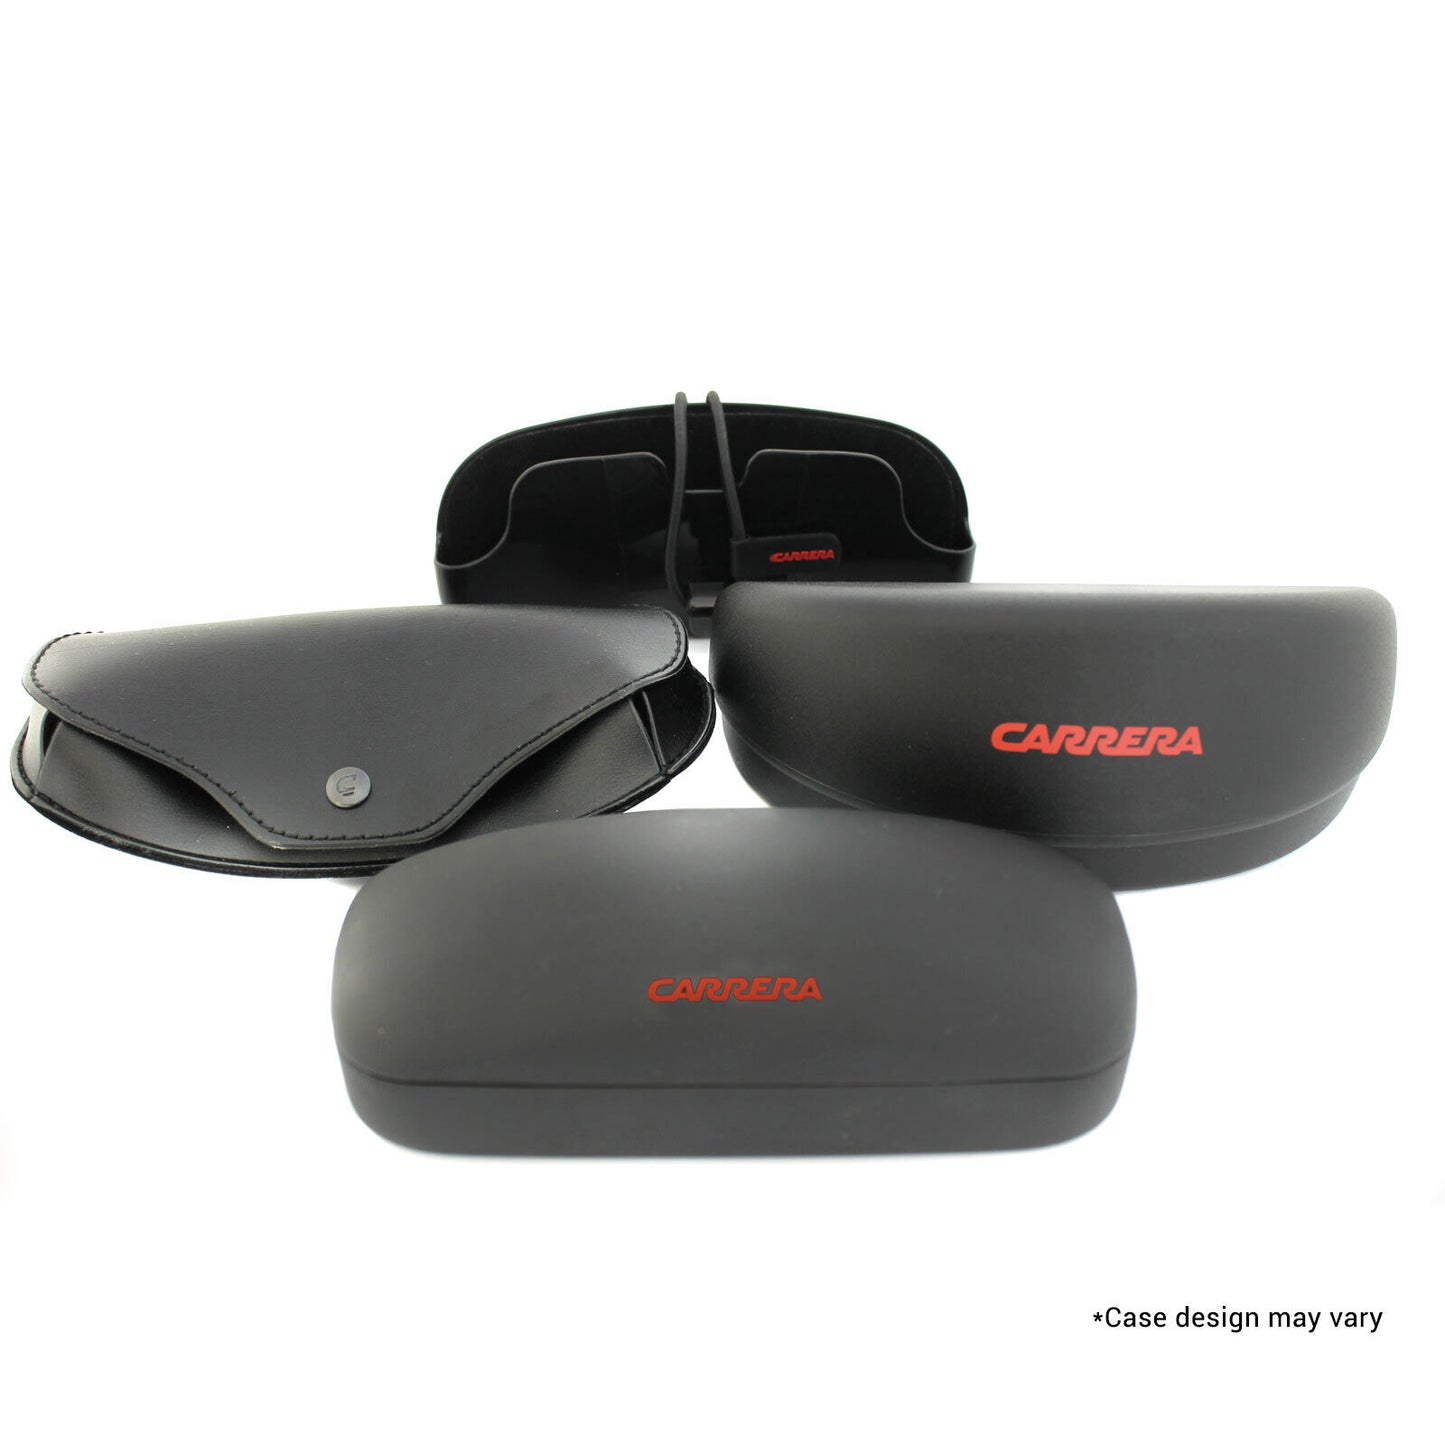 Carrera CARRERA 8839-0003 00 55mm New Eyeglasses